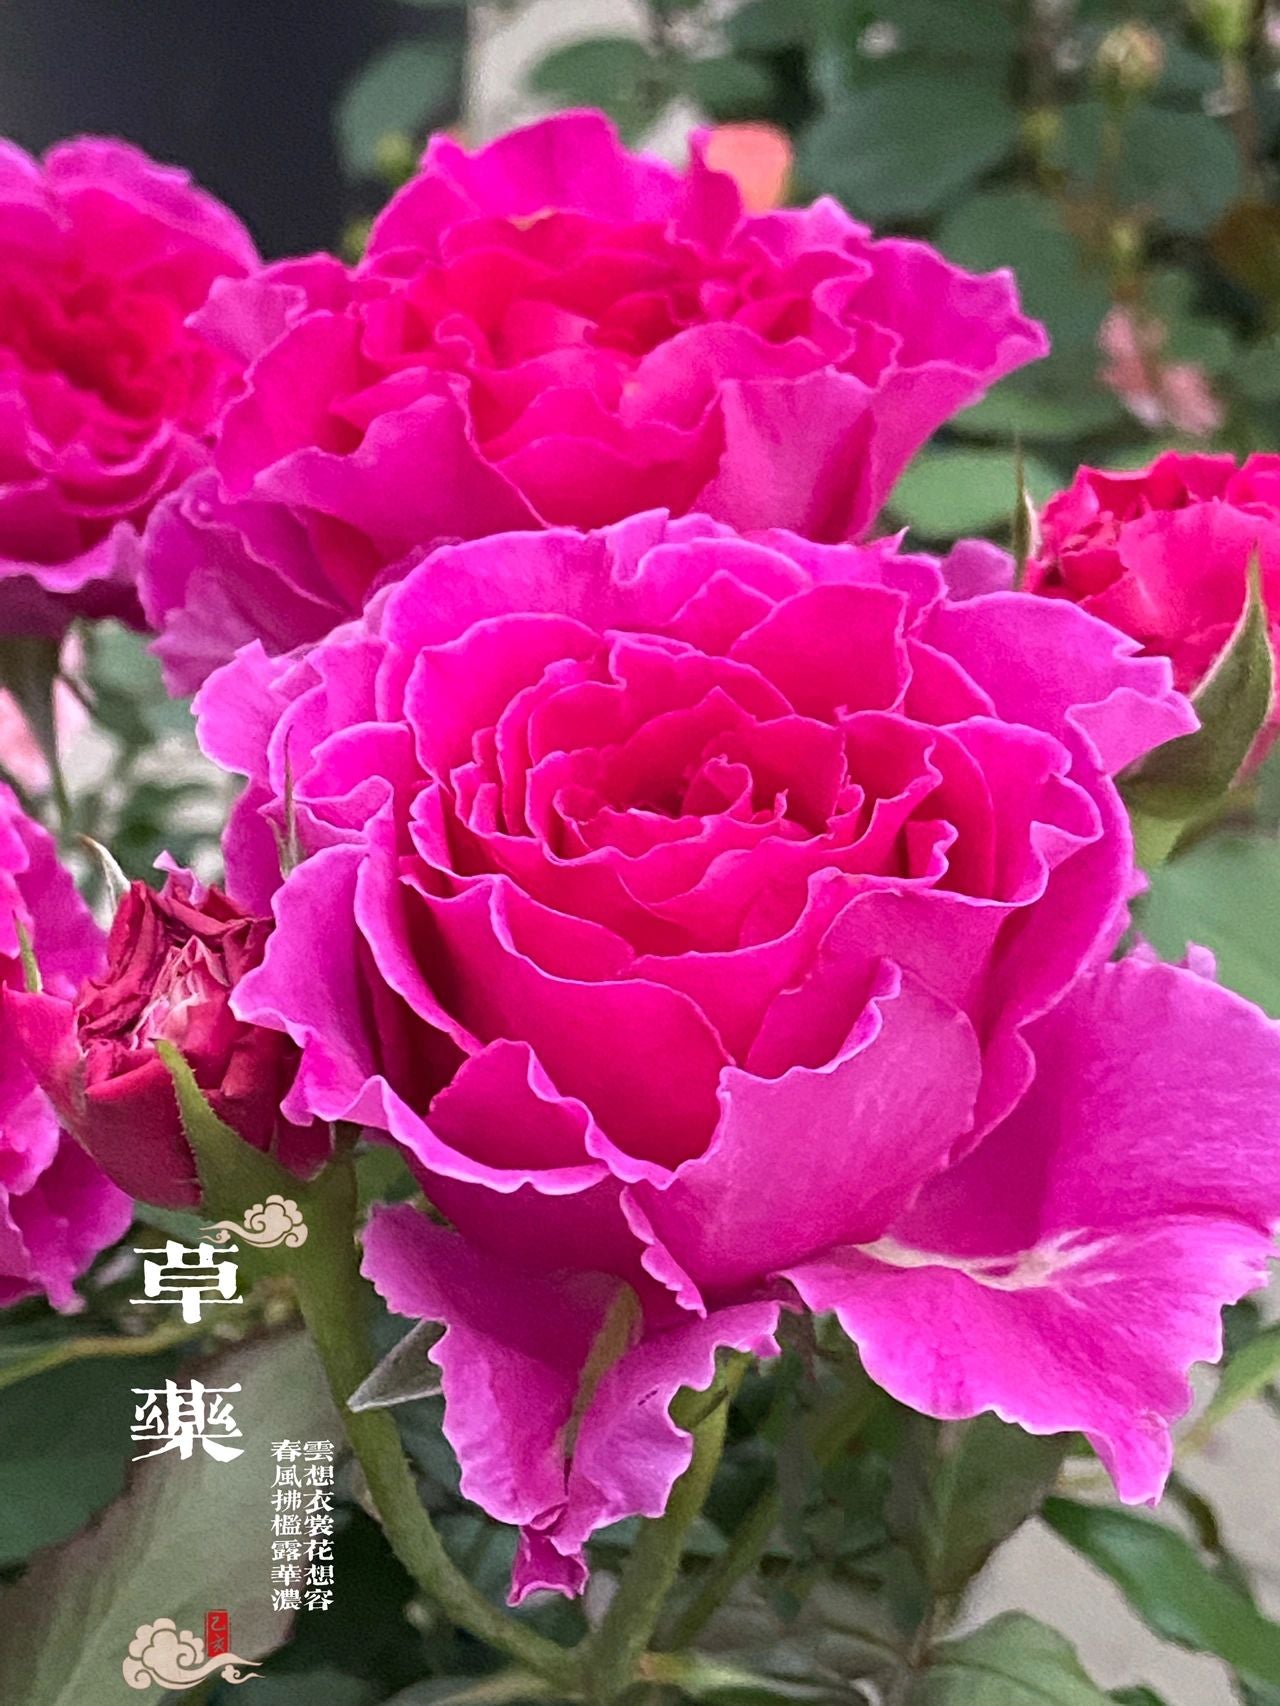 Rose[Ramukan|ラムカン] - Rare Japanese Cutting Rose| 1.5 Gallon-OwnRoot| Wavy Bloom| Ruffle lace| 草药| Similar to Sheherazad | Sun Tolerant | herb